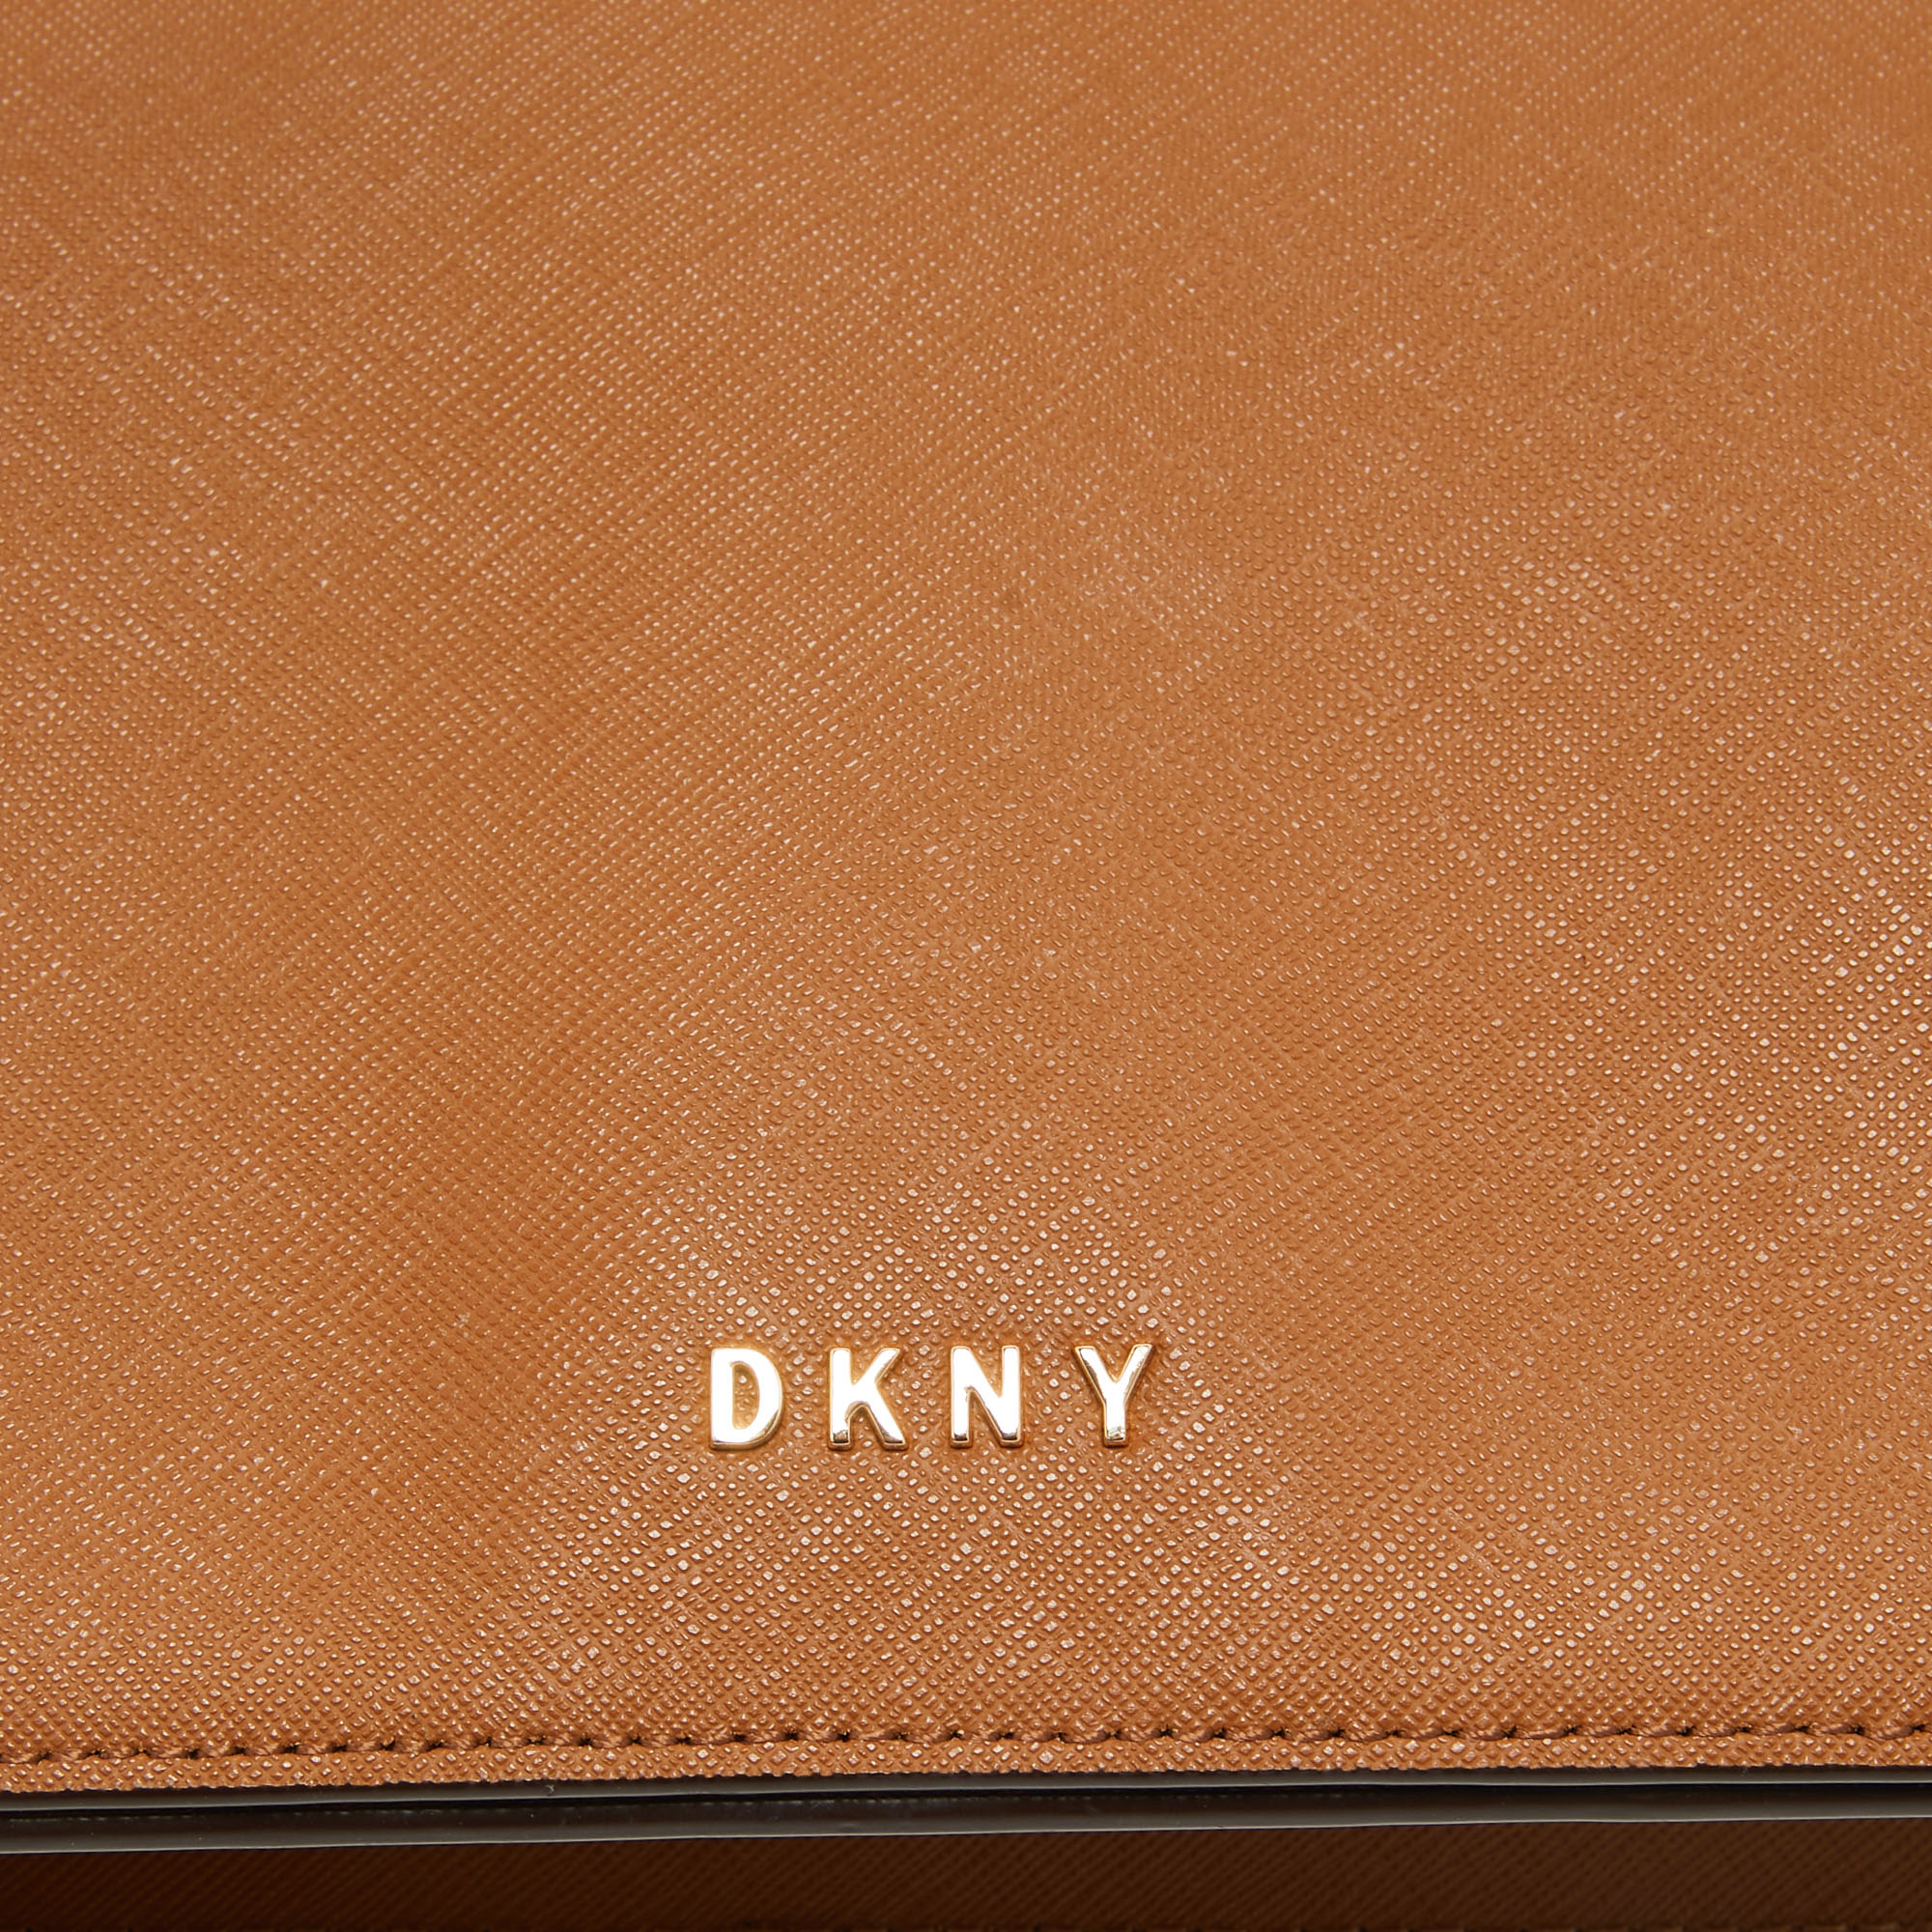 DKNY Brown Leather Chain Crossbody Bag